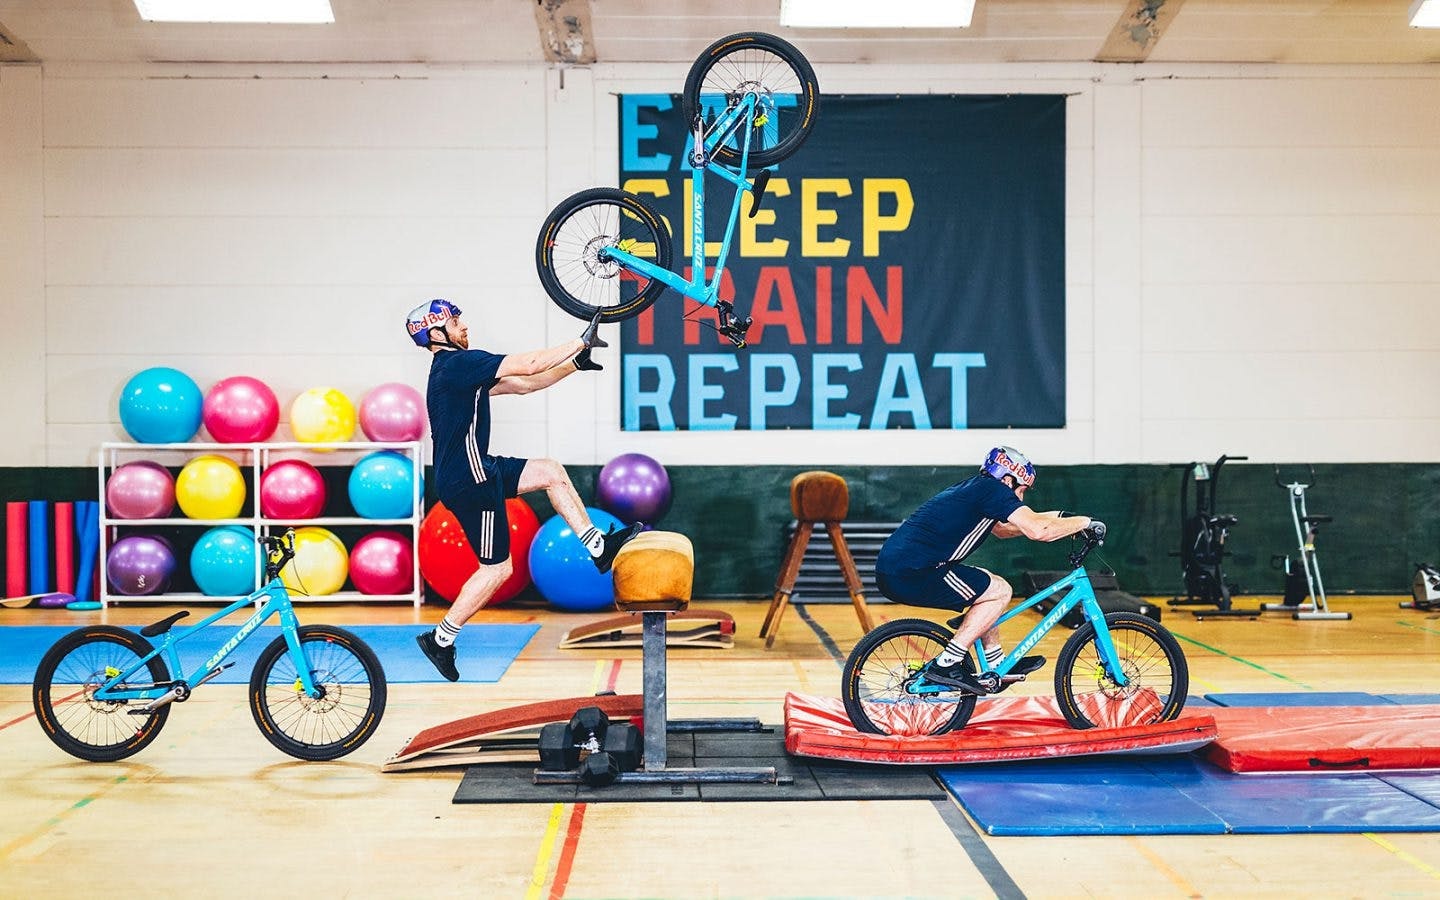 Danny MacAskill riding his carbon trials bike in a gymnasium